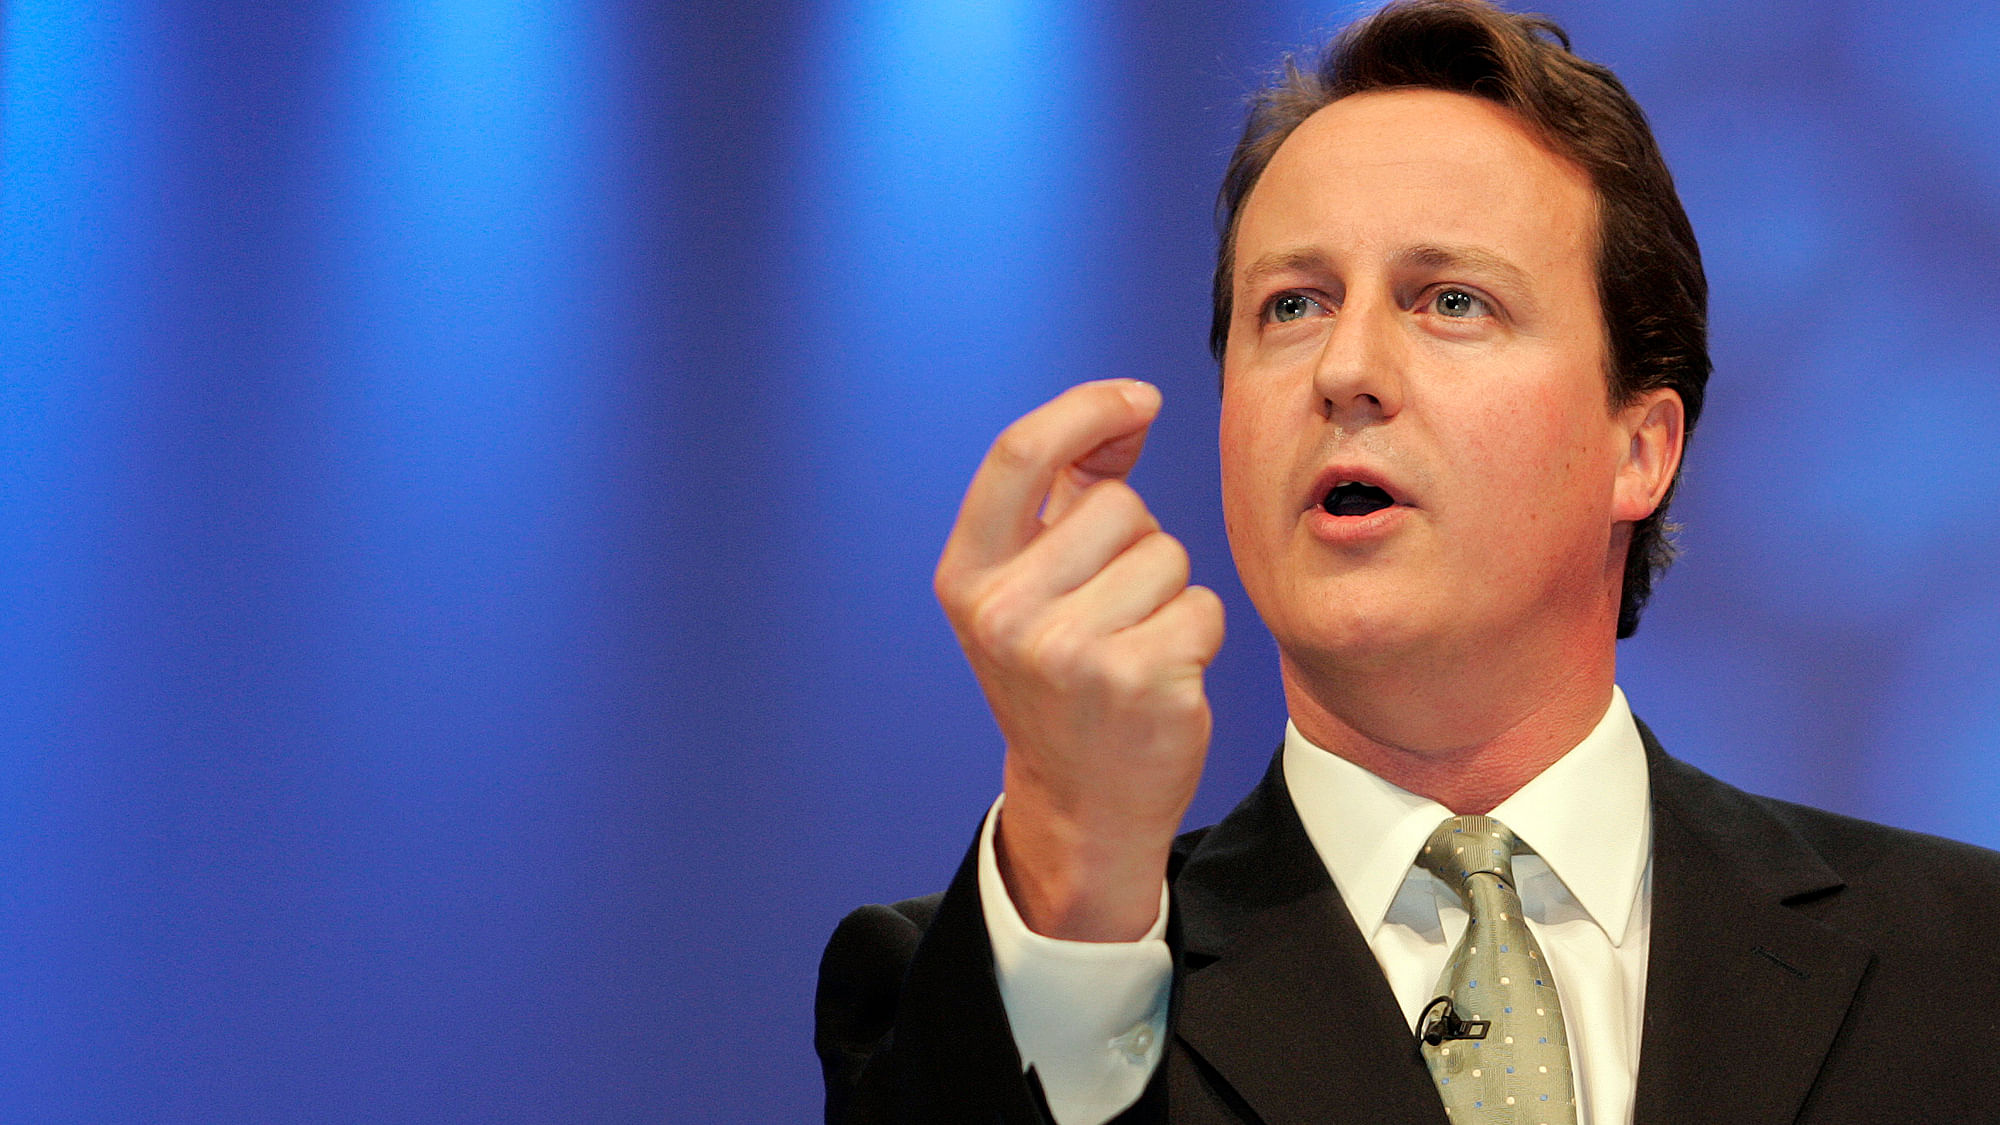  David Cameron, Former PM, United Kingdom. (Photo: Reuters)